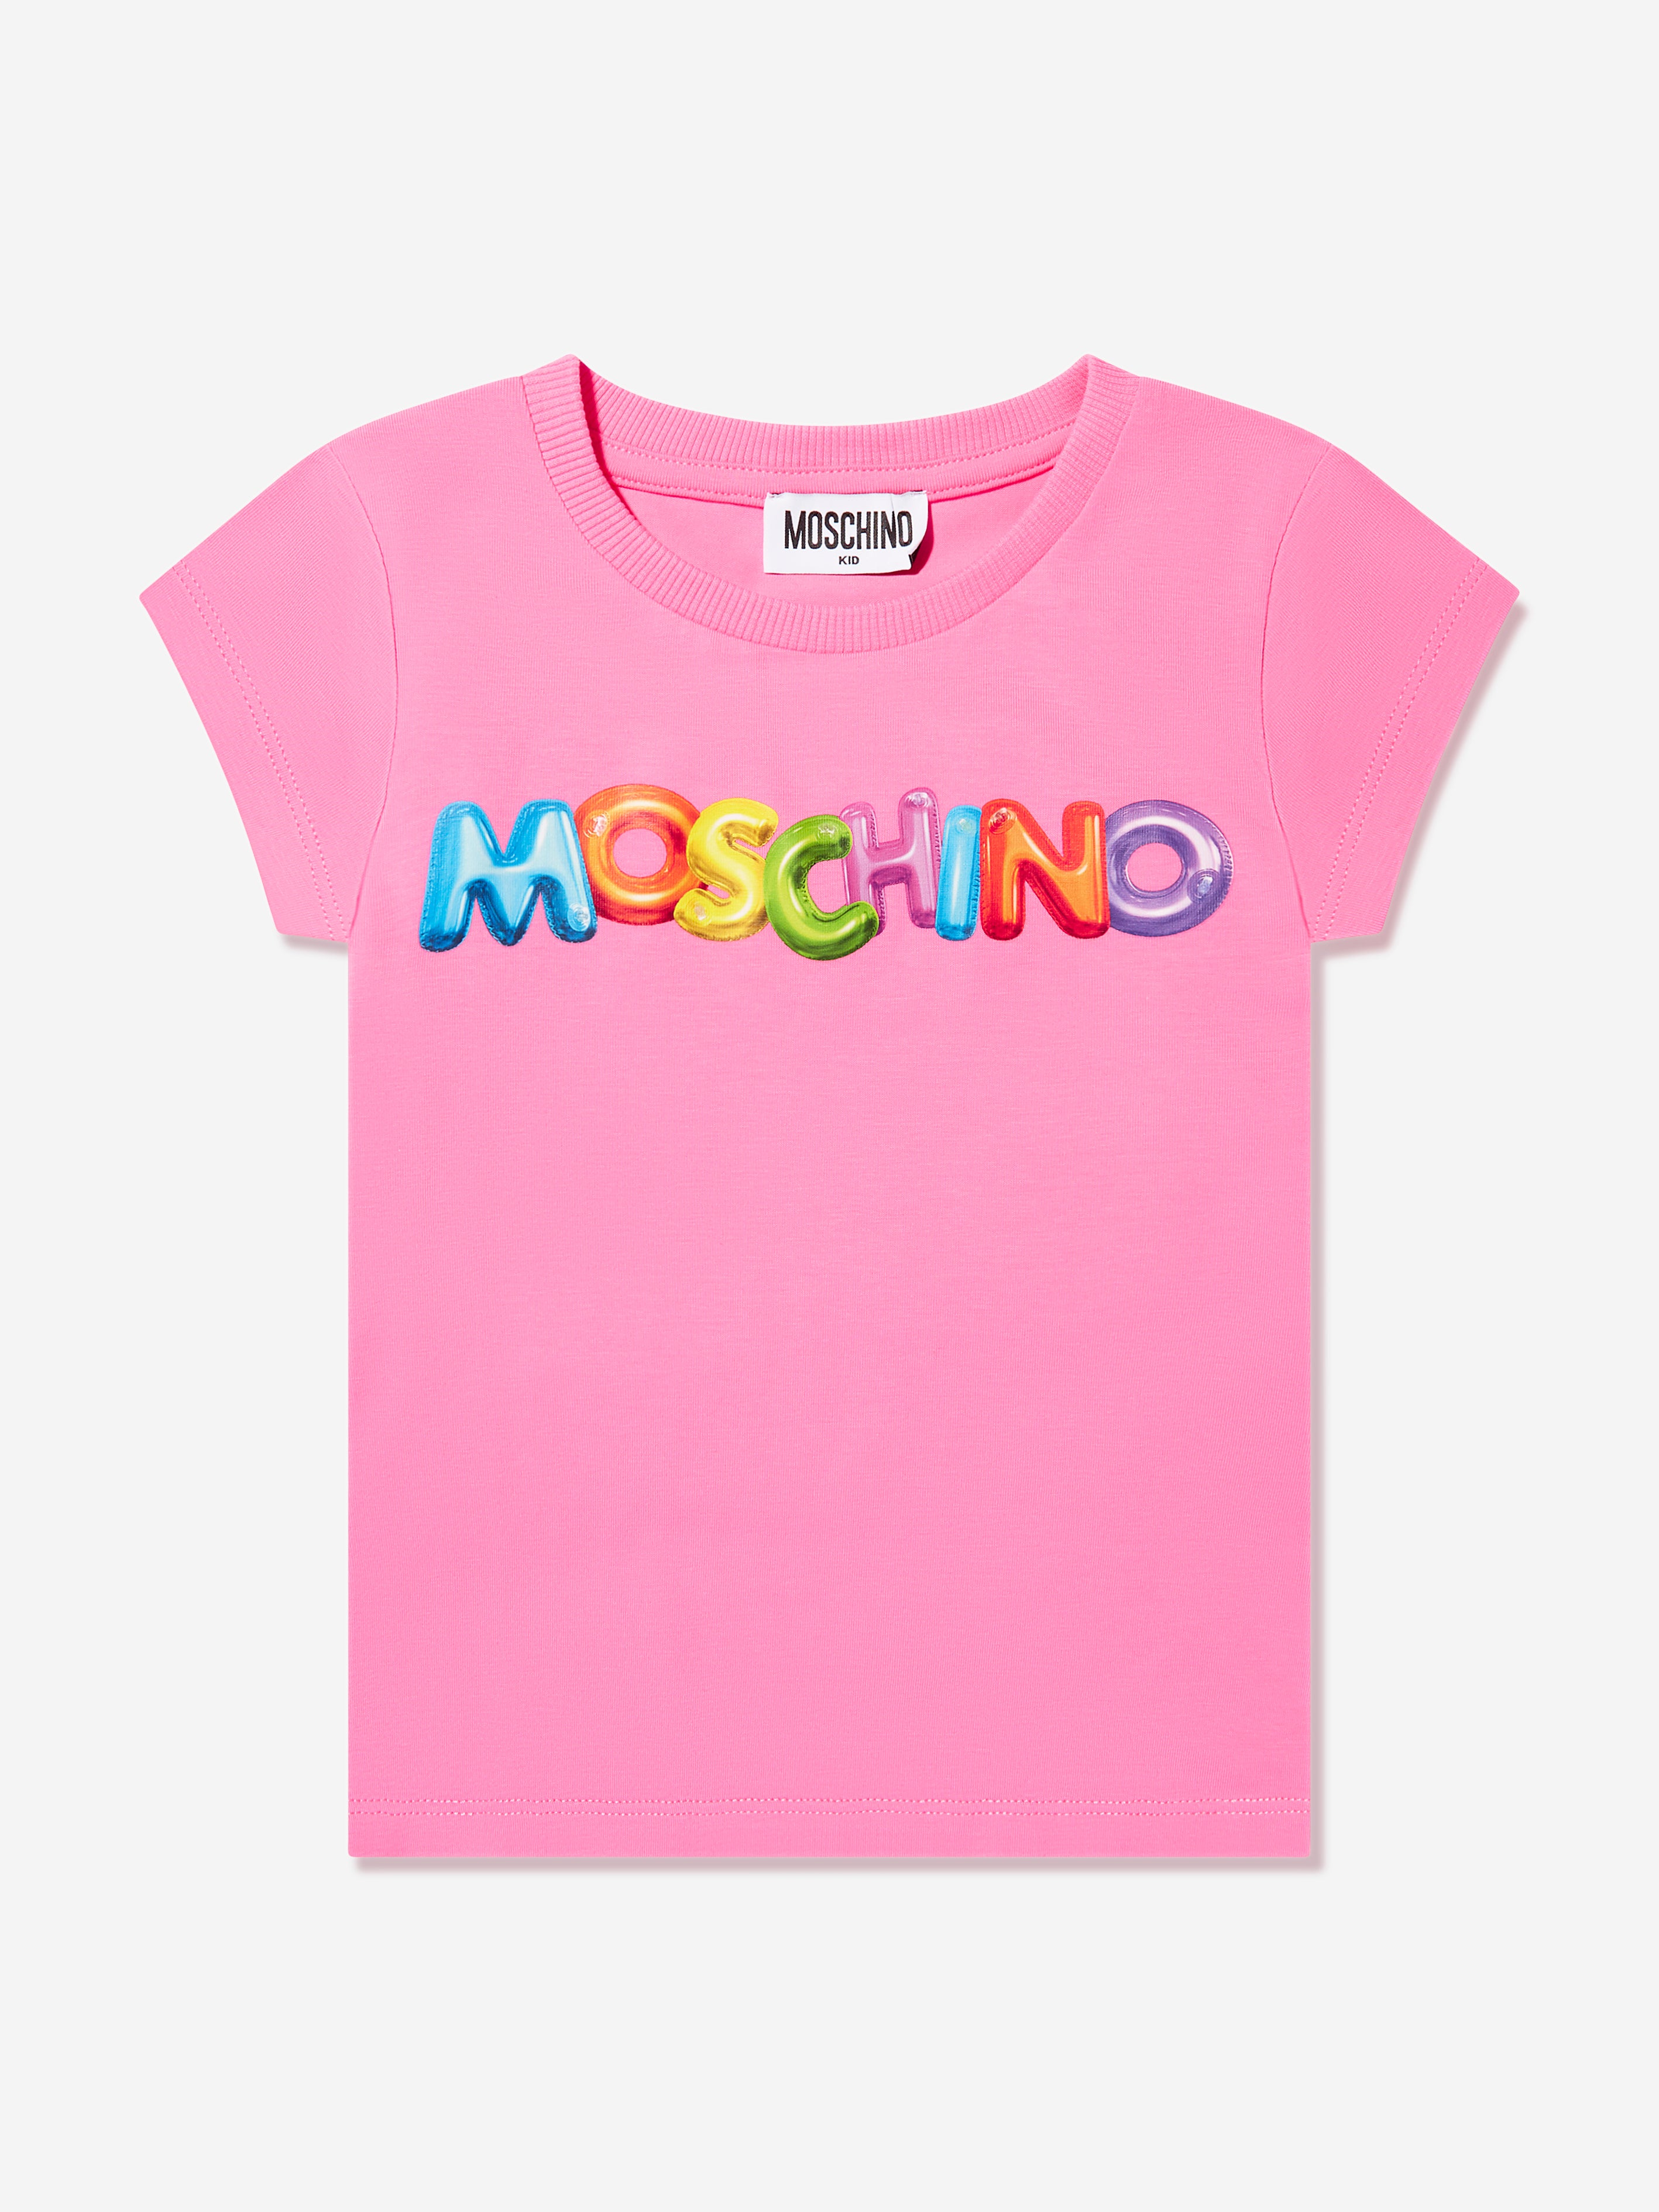 Sale - Discounted Designer Moschino Kids | Childsplay Clothing